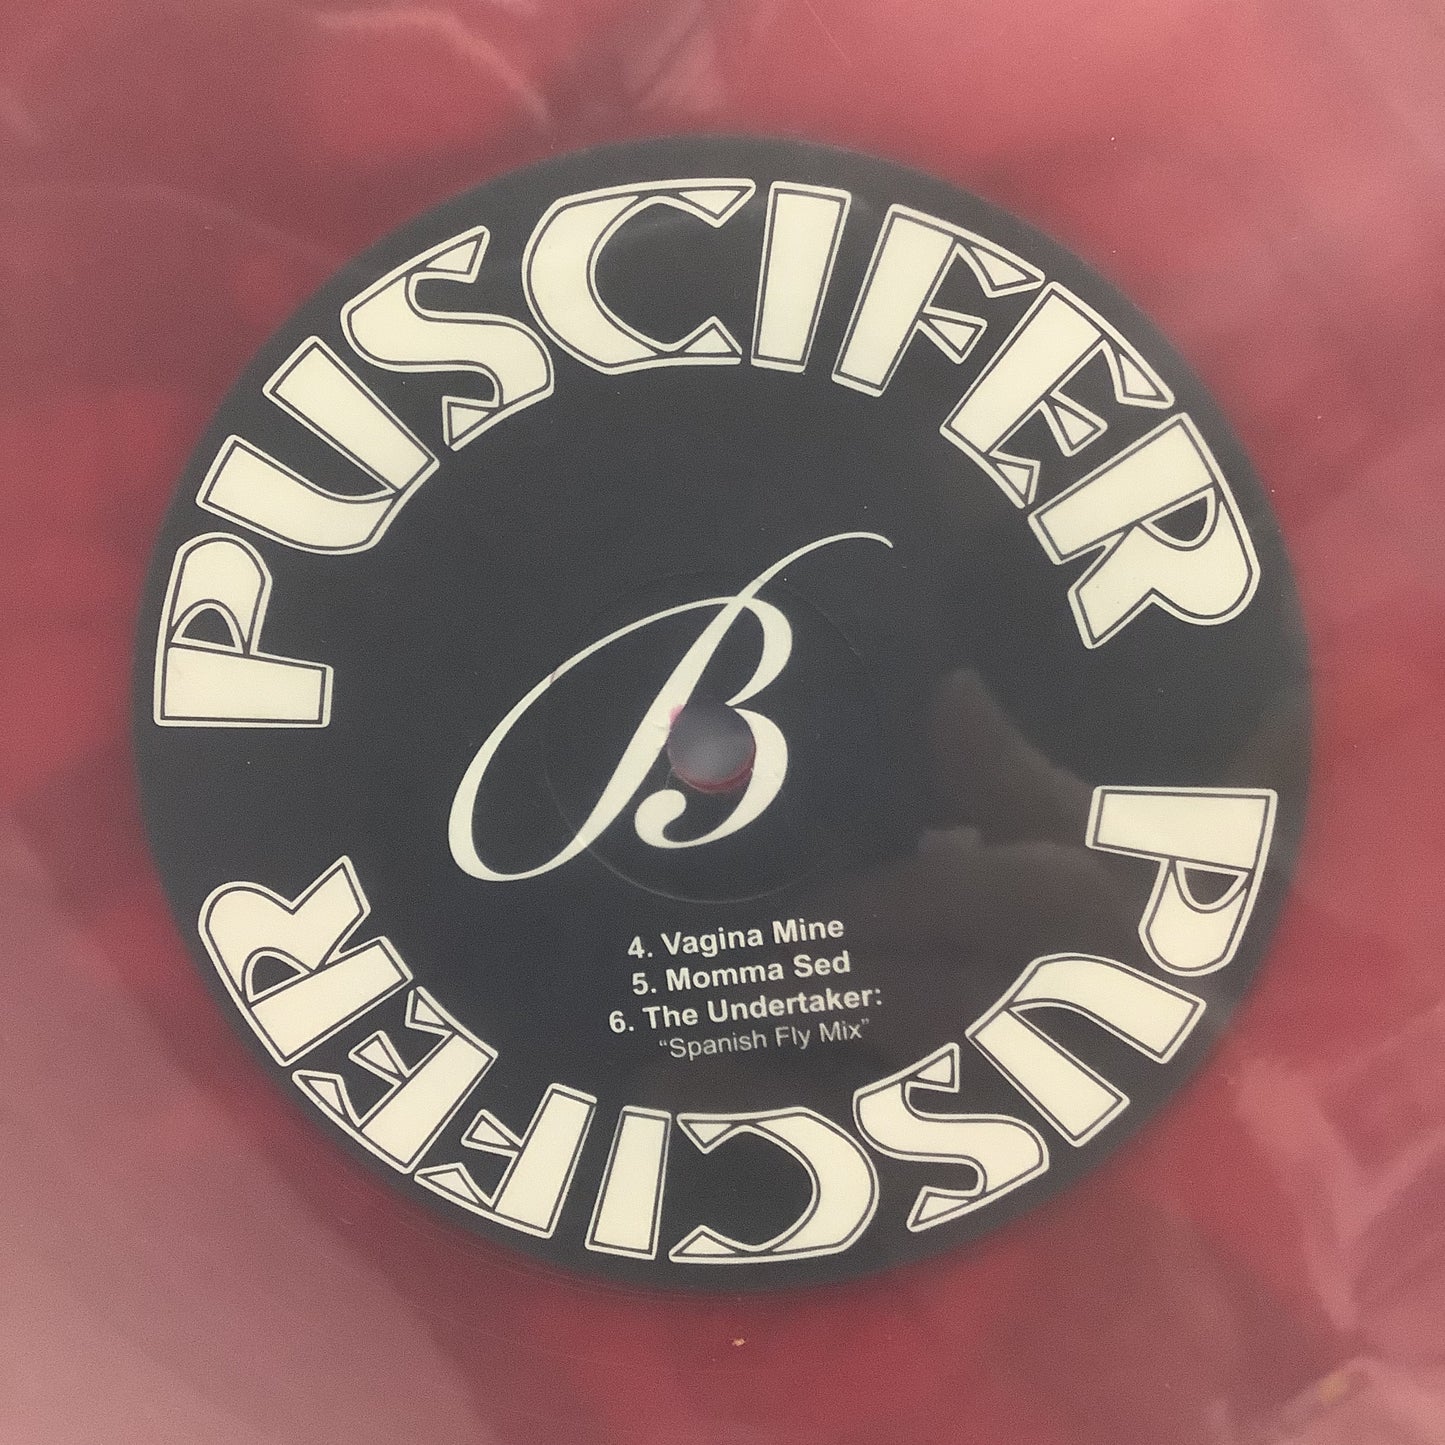 Puscifer - "V" is for Vagina - 2013 Coachella Edition LP